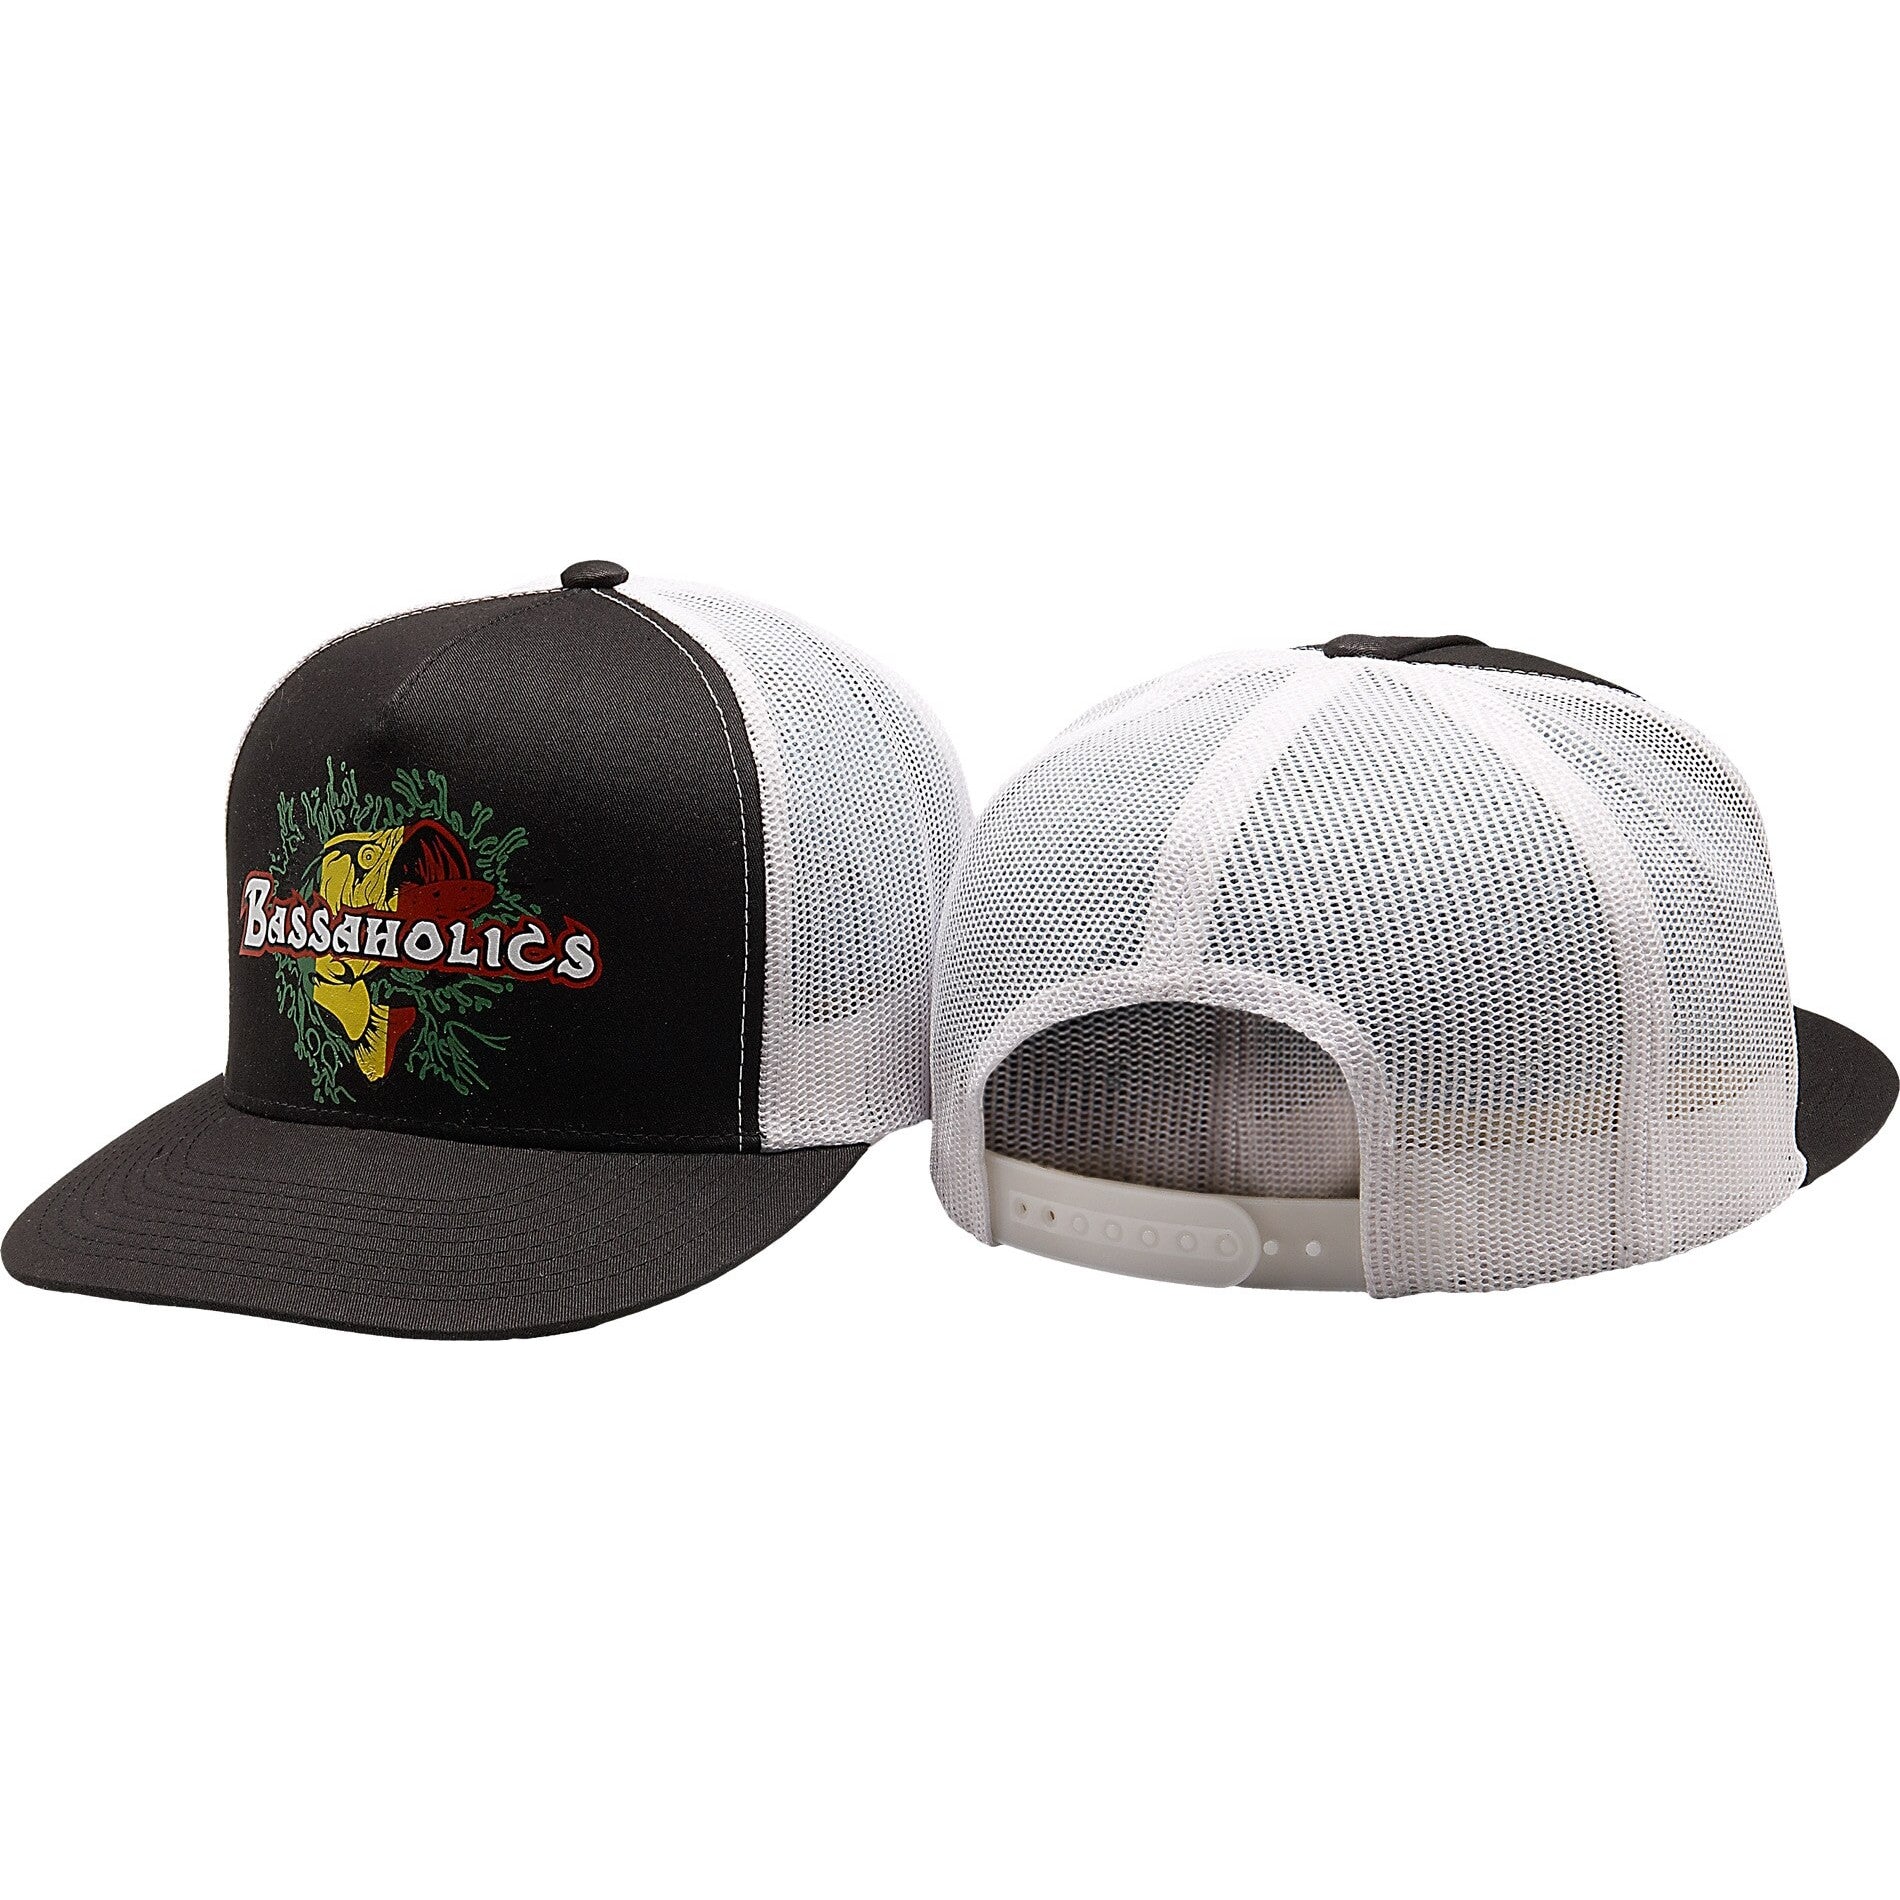 Bassaholics Trucker Snapback Hats Zone / OSFM